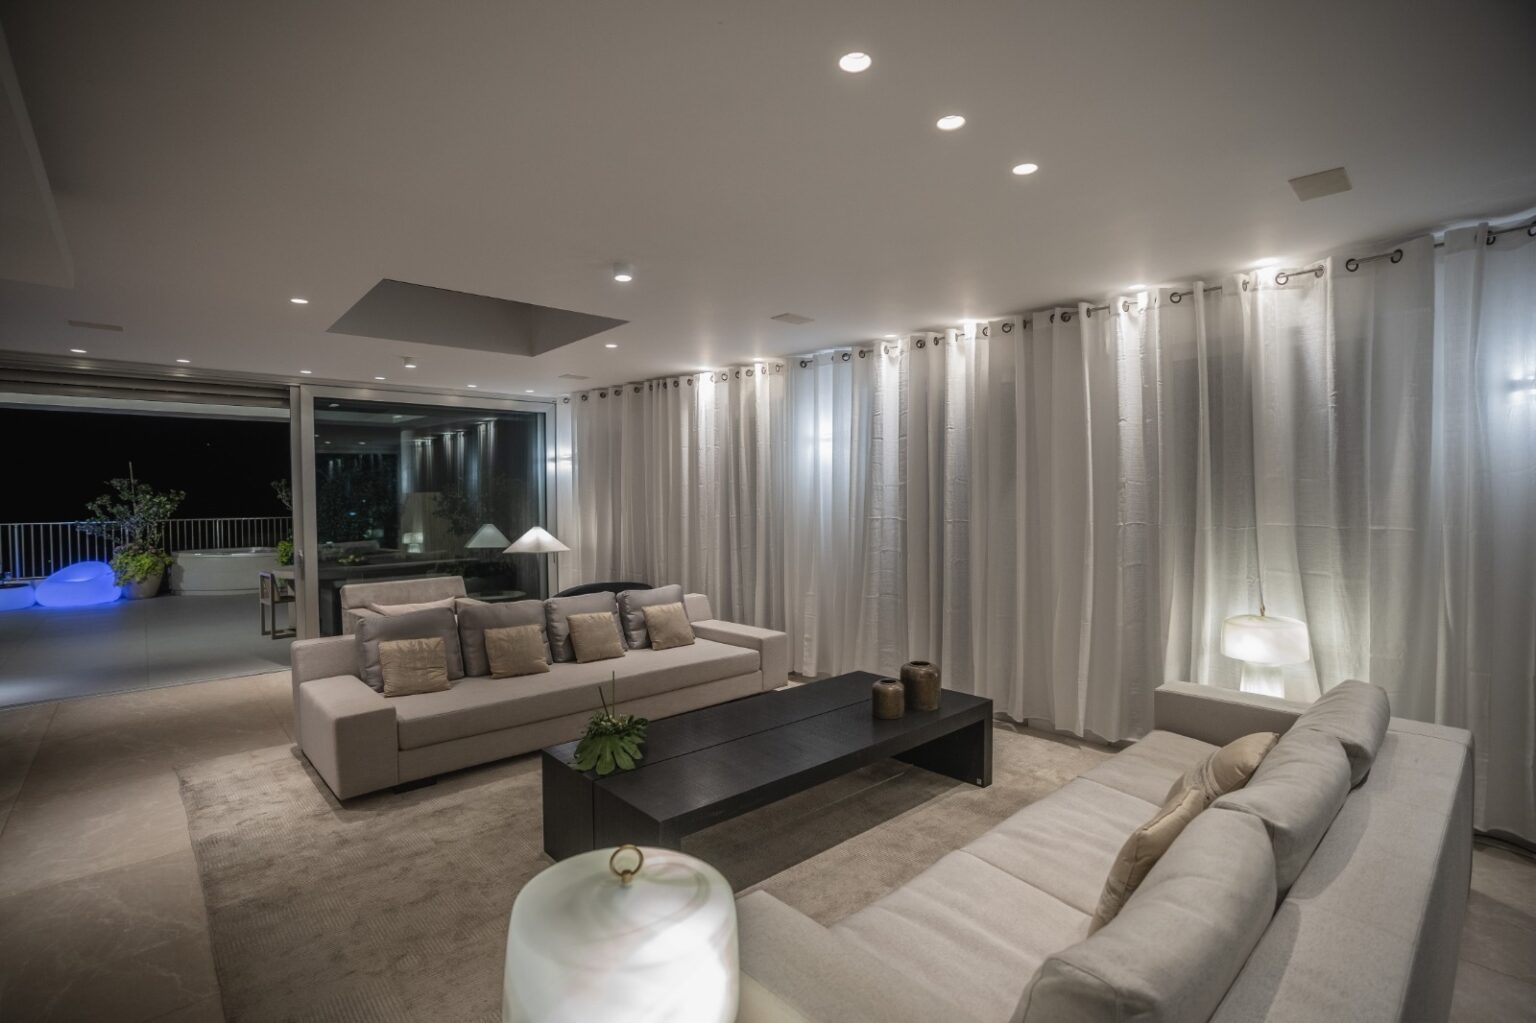 12. Penthouse Living Room Latest Interior 2020 1536x1023 